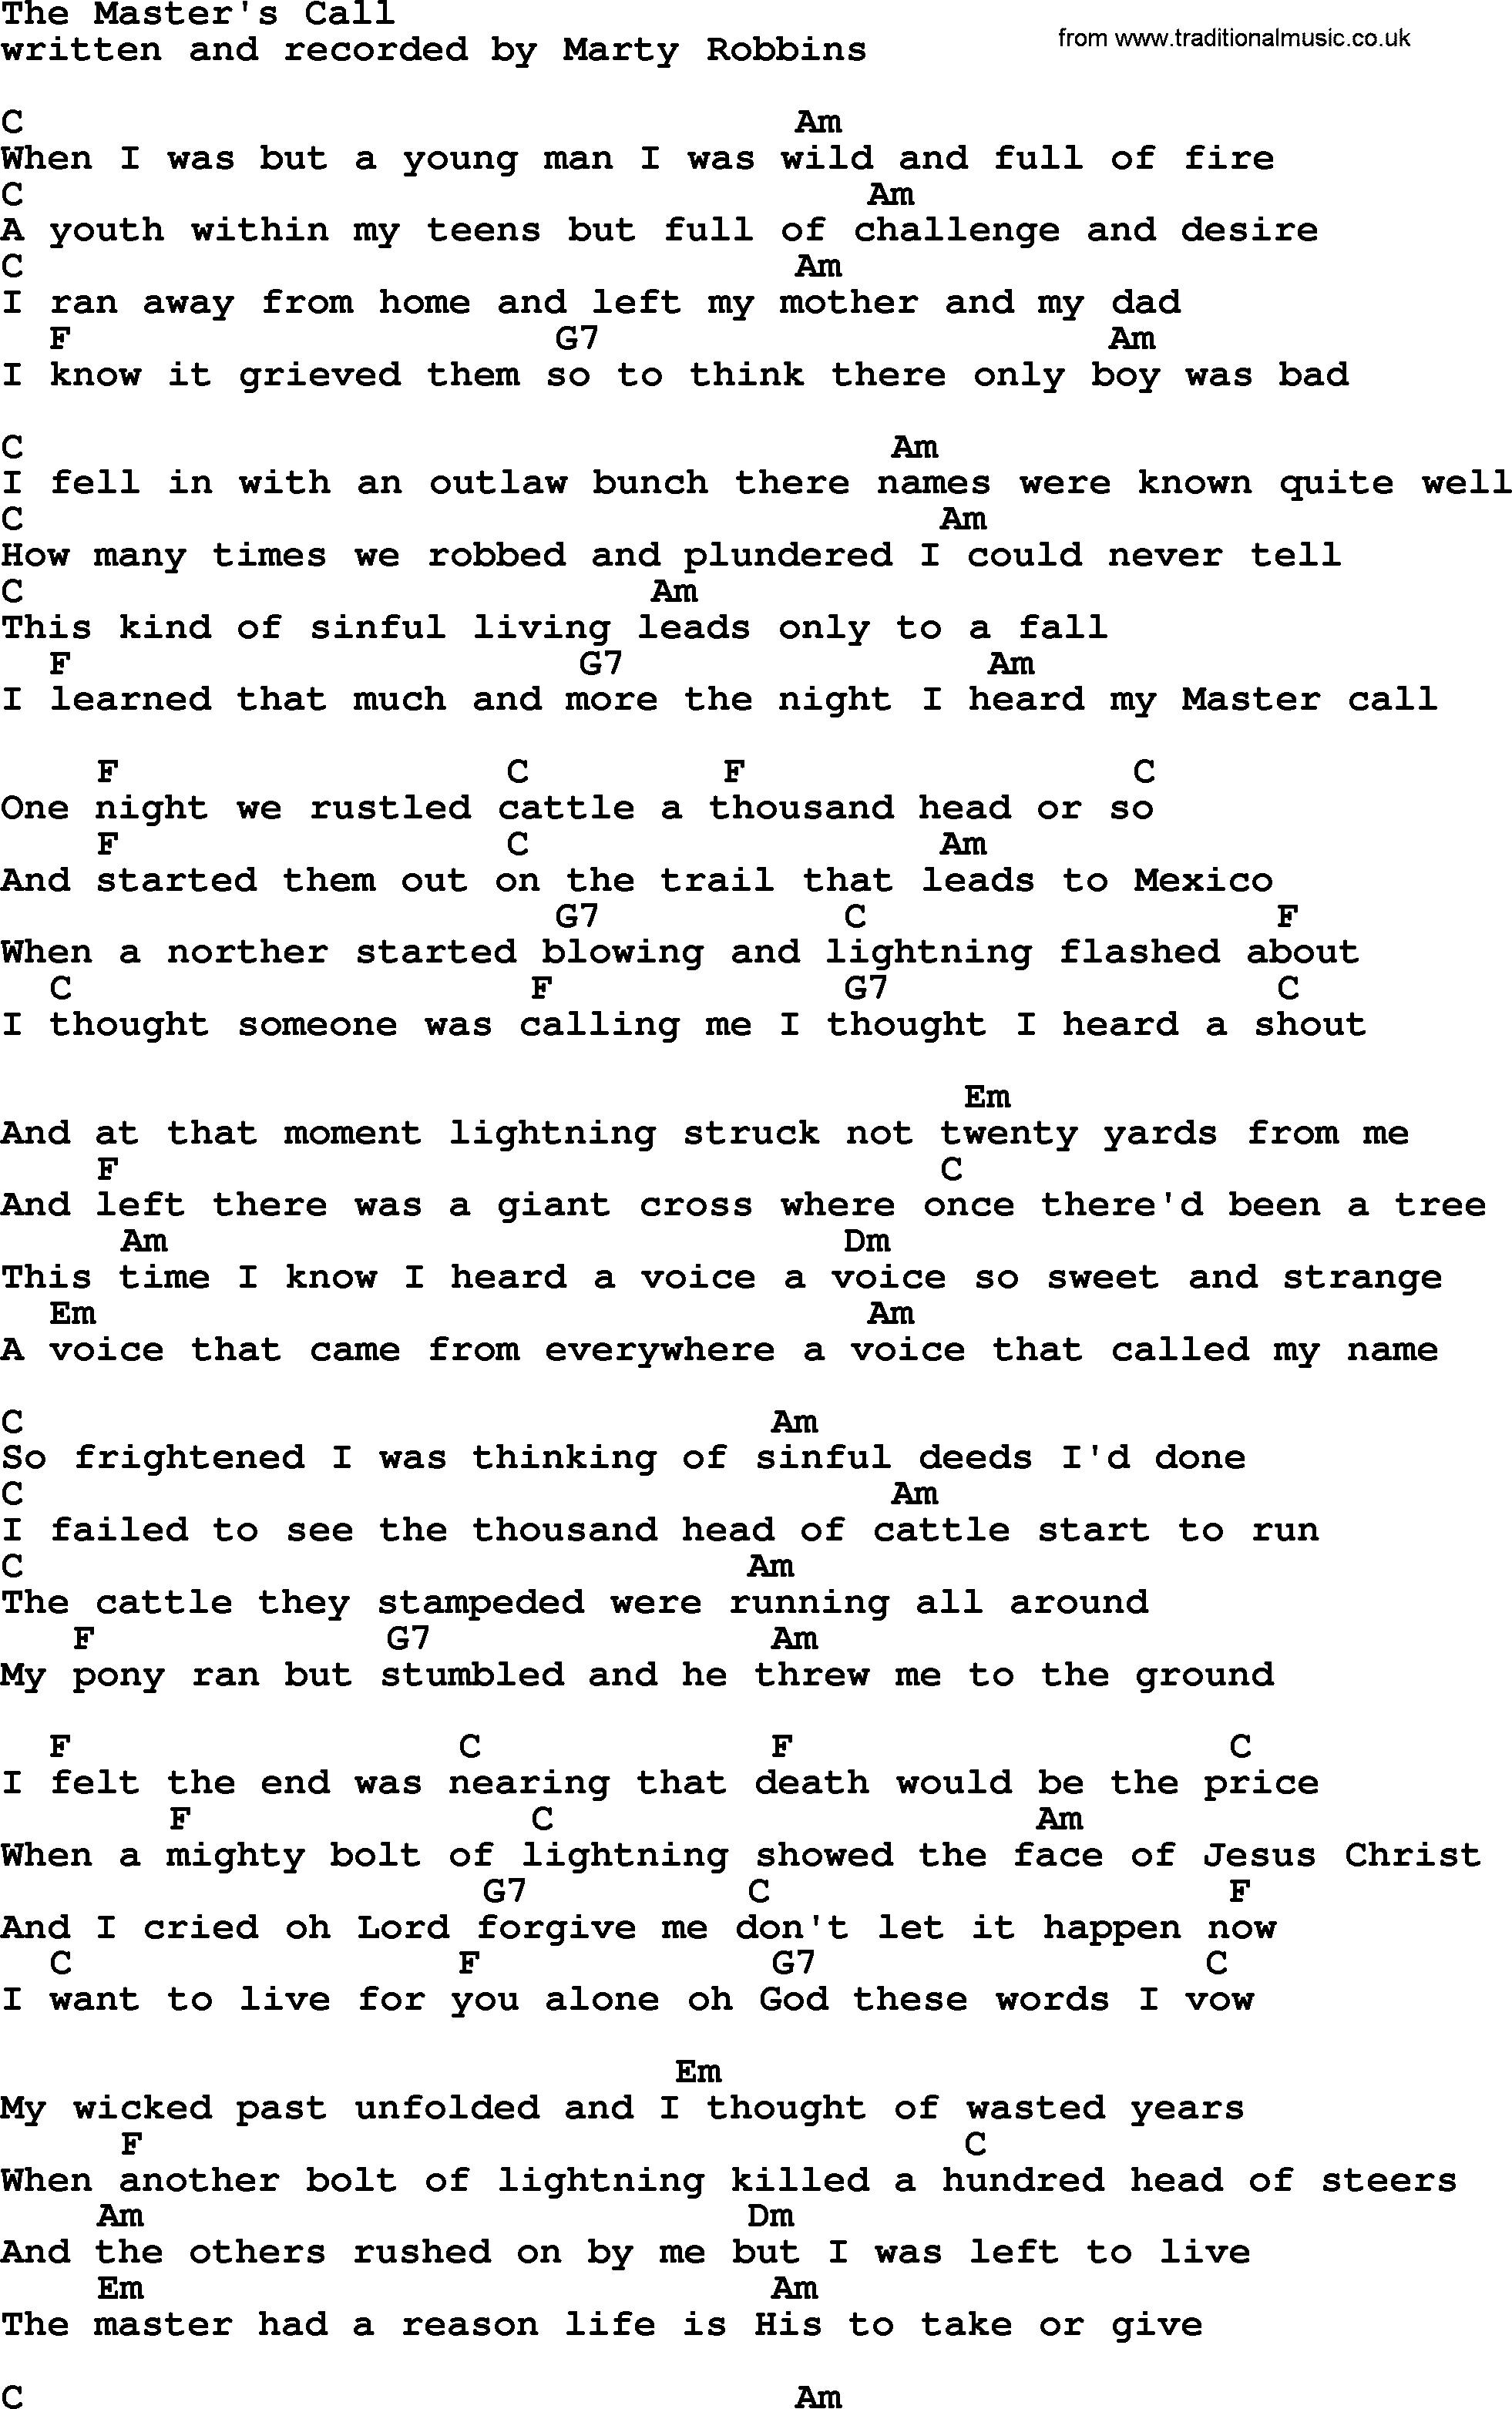 Marty Robbins song: The Master's Call, lyrics and chords